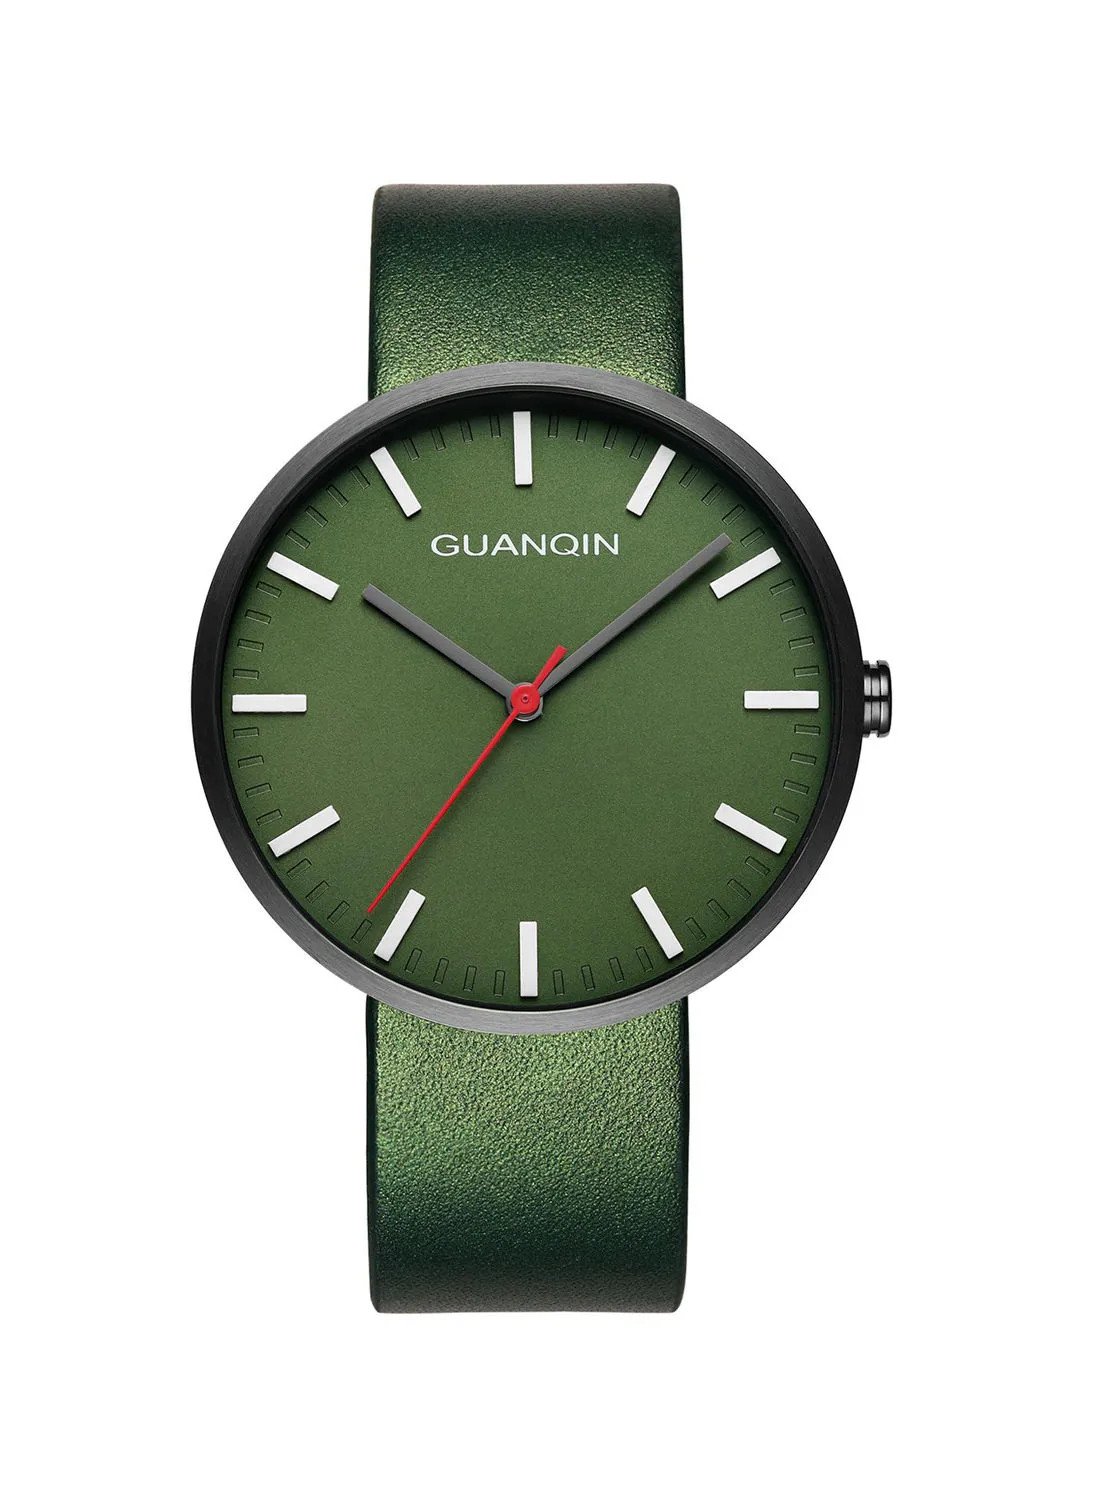 GUANQIN Leather Analog Wrist Watch GS19108